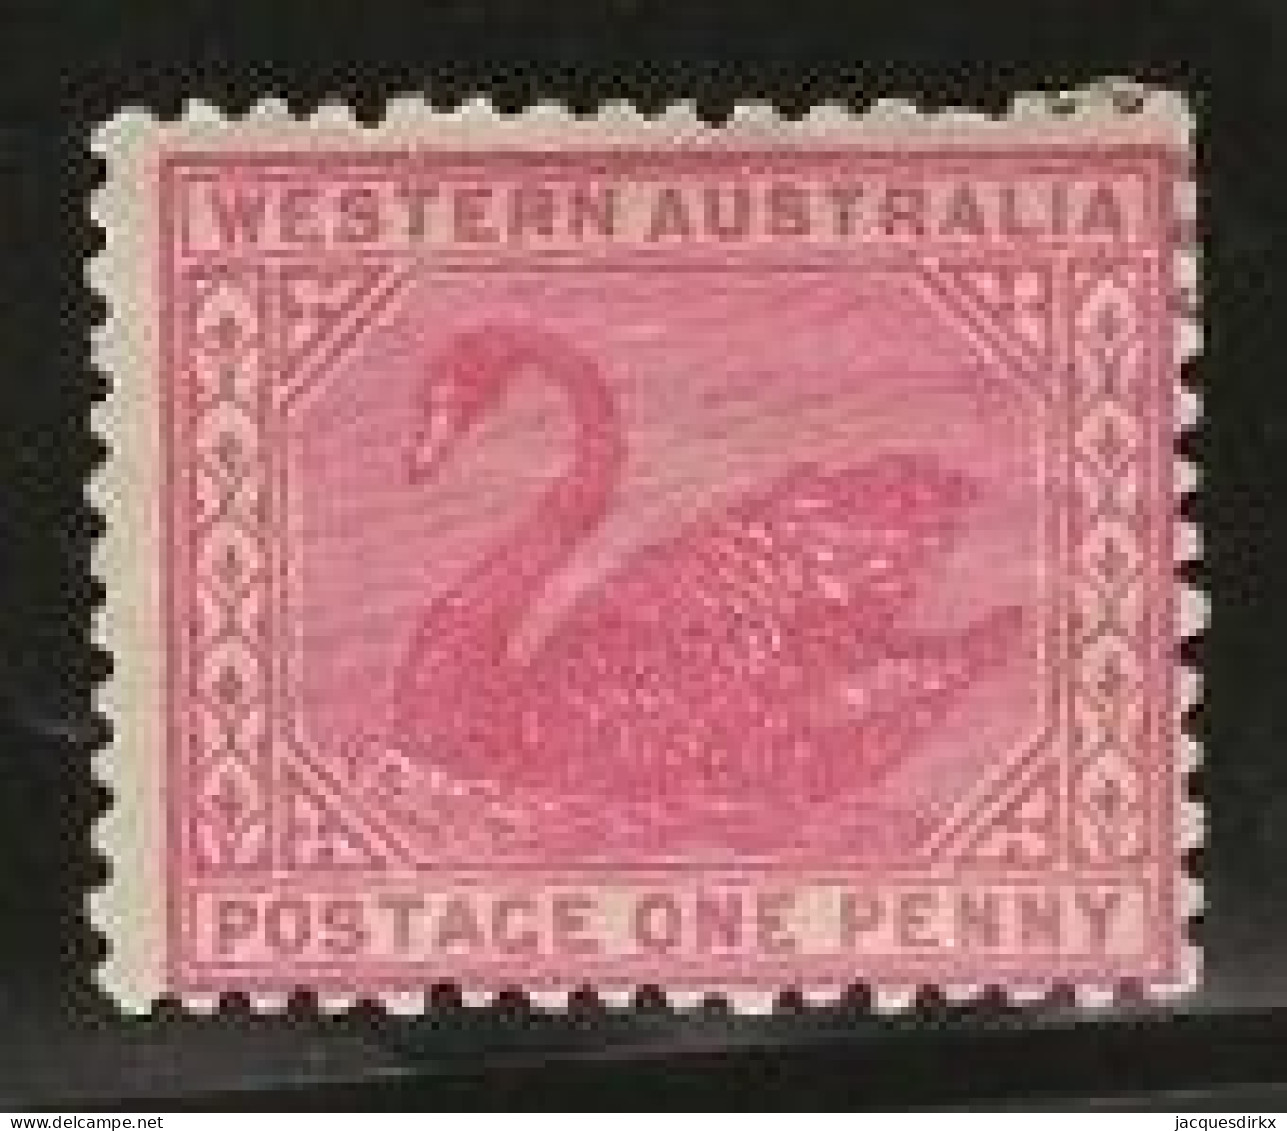 Western Australia     .   SG    .    139b        .   *       .     Mint-hinged - Neufs